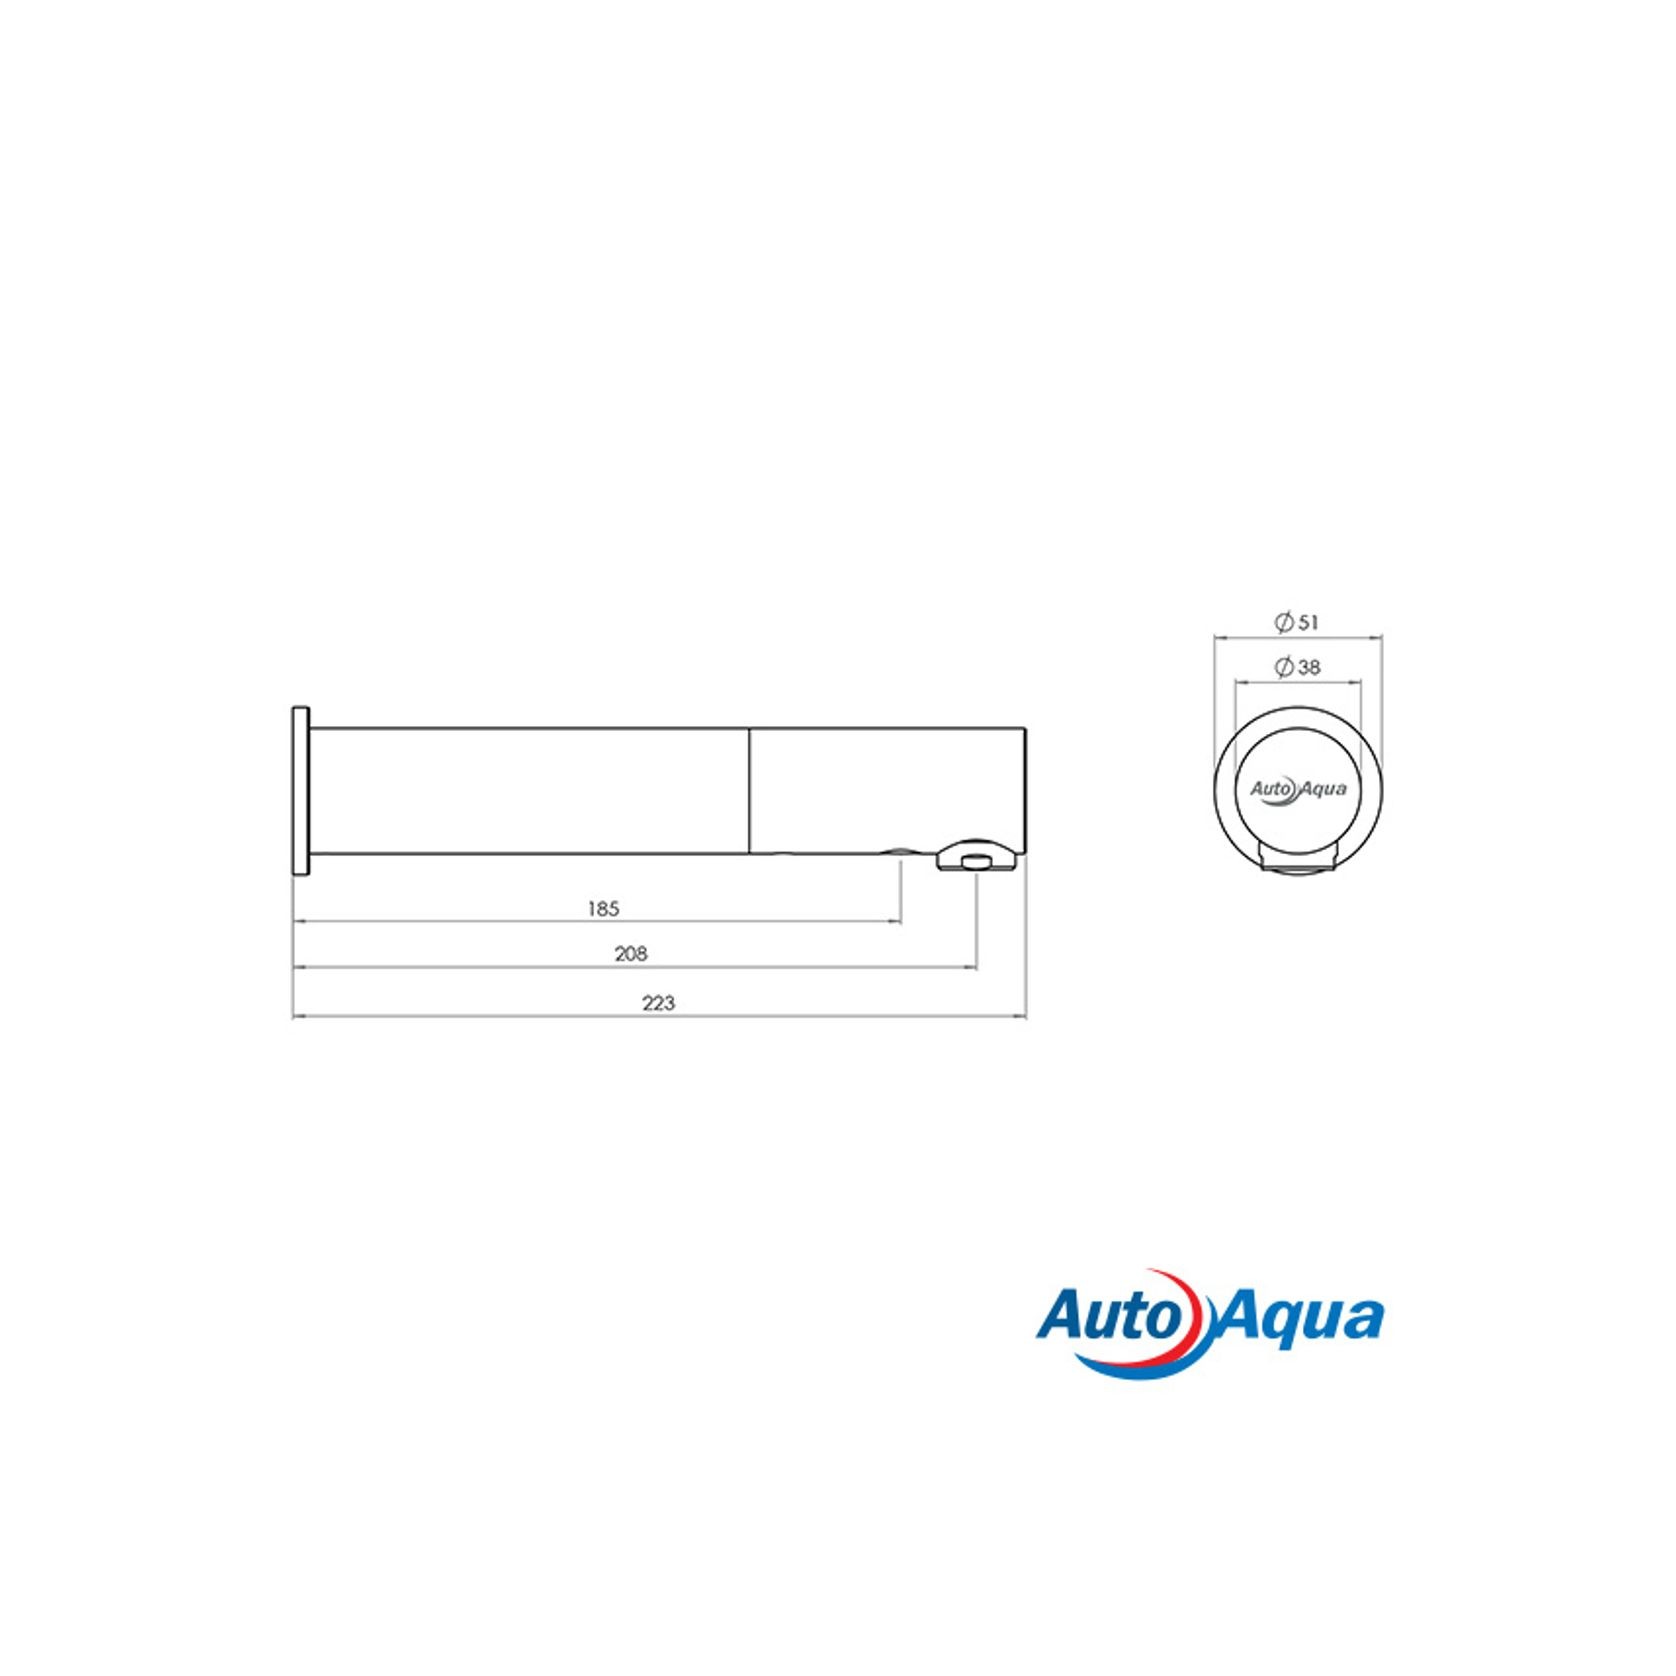 AutoAqua – S38 Wall Sensor Tap gallery detail image